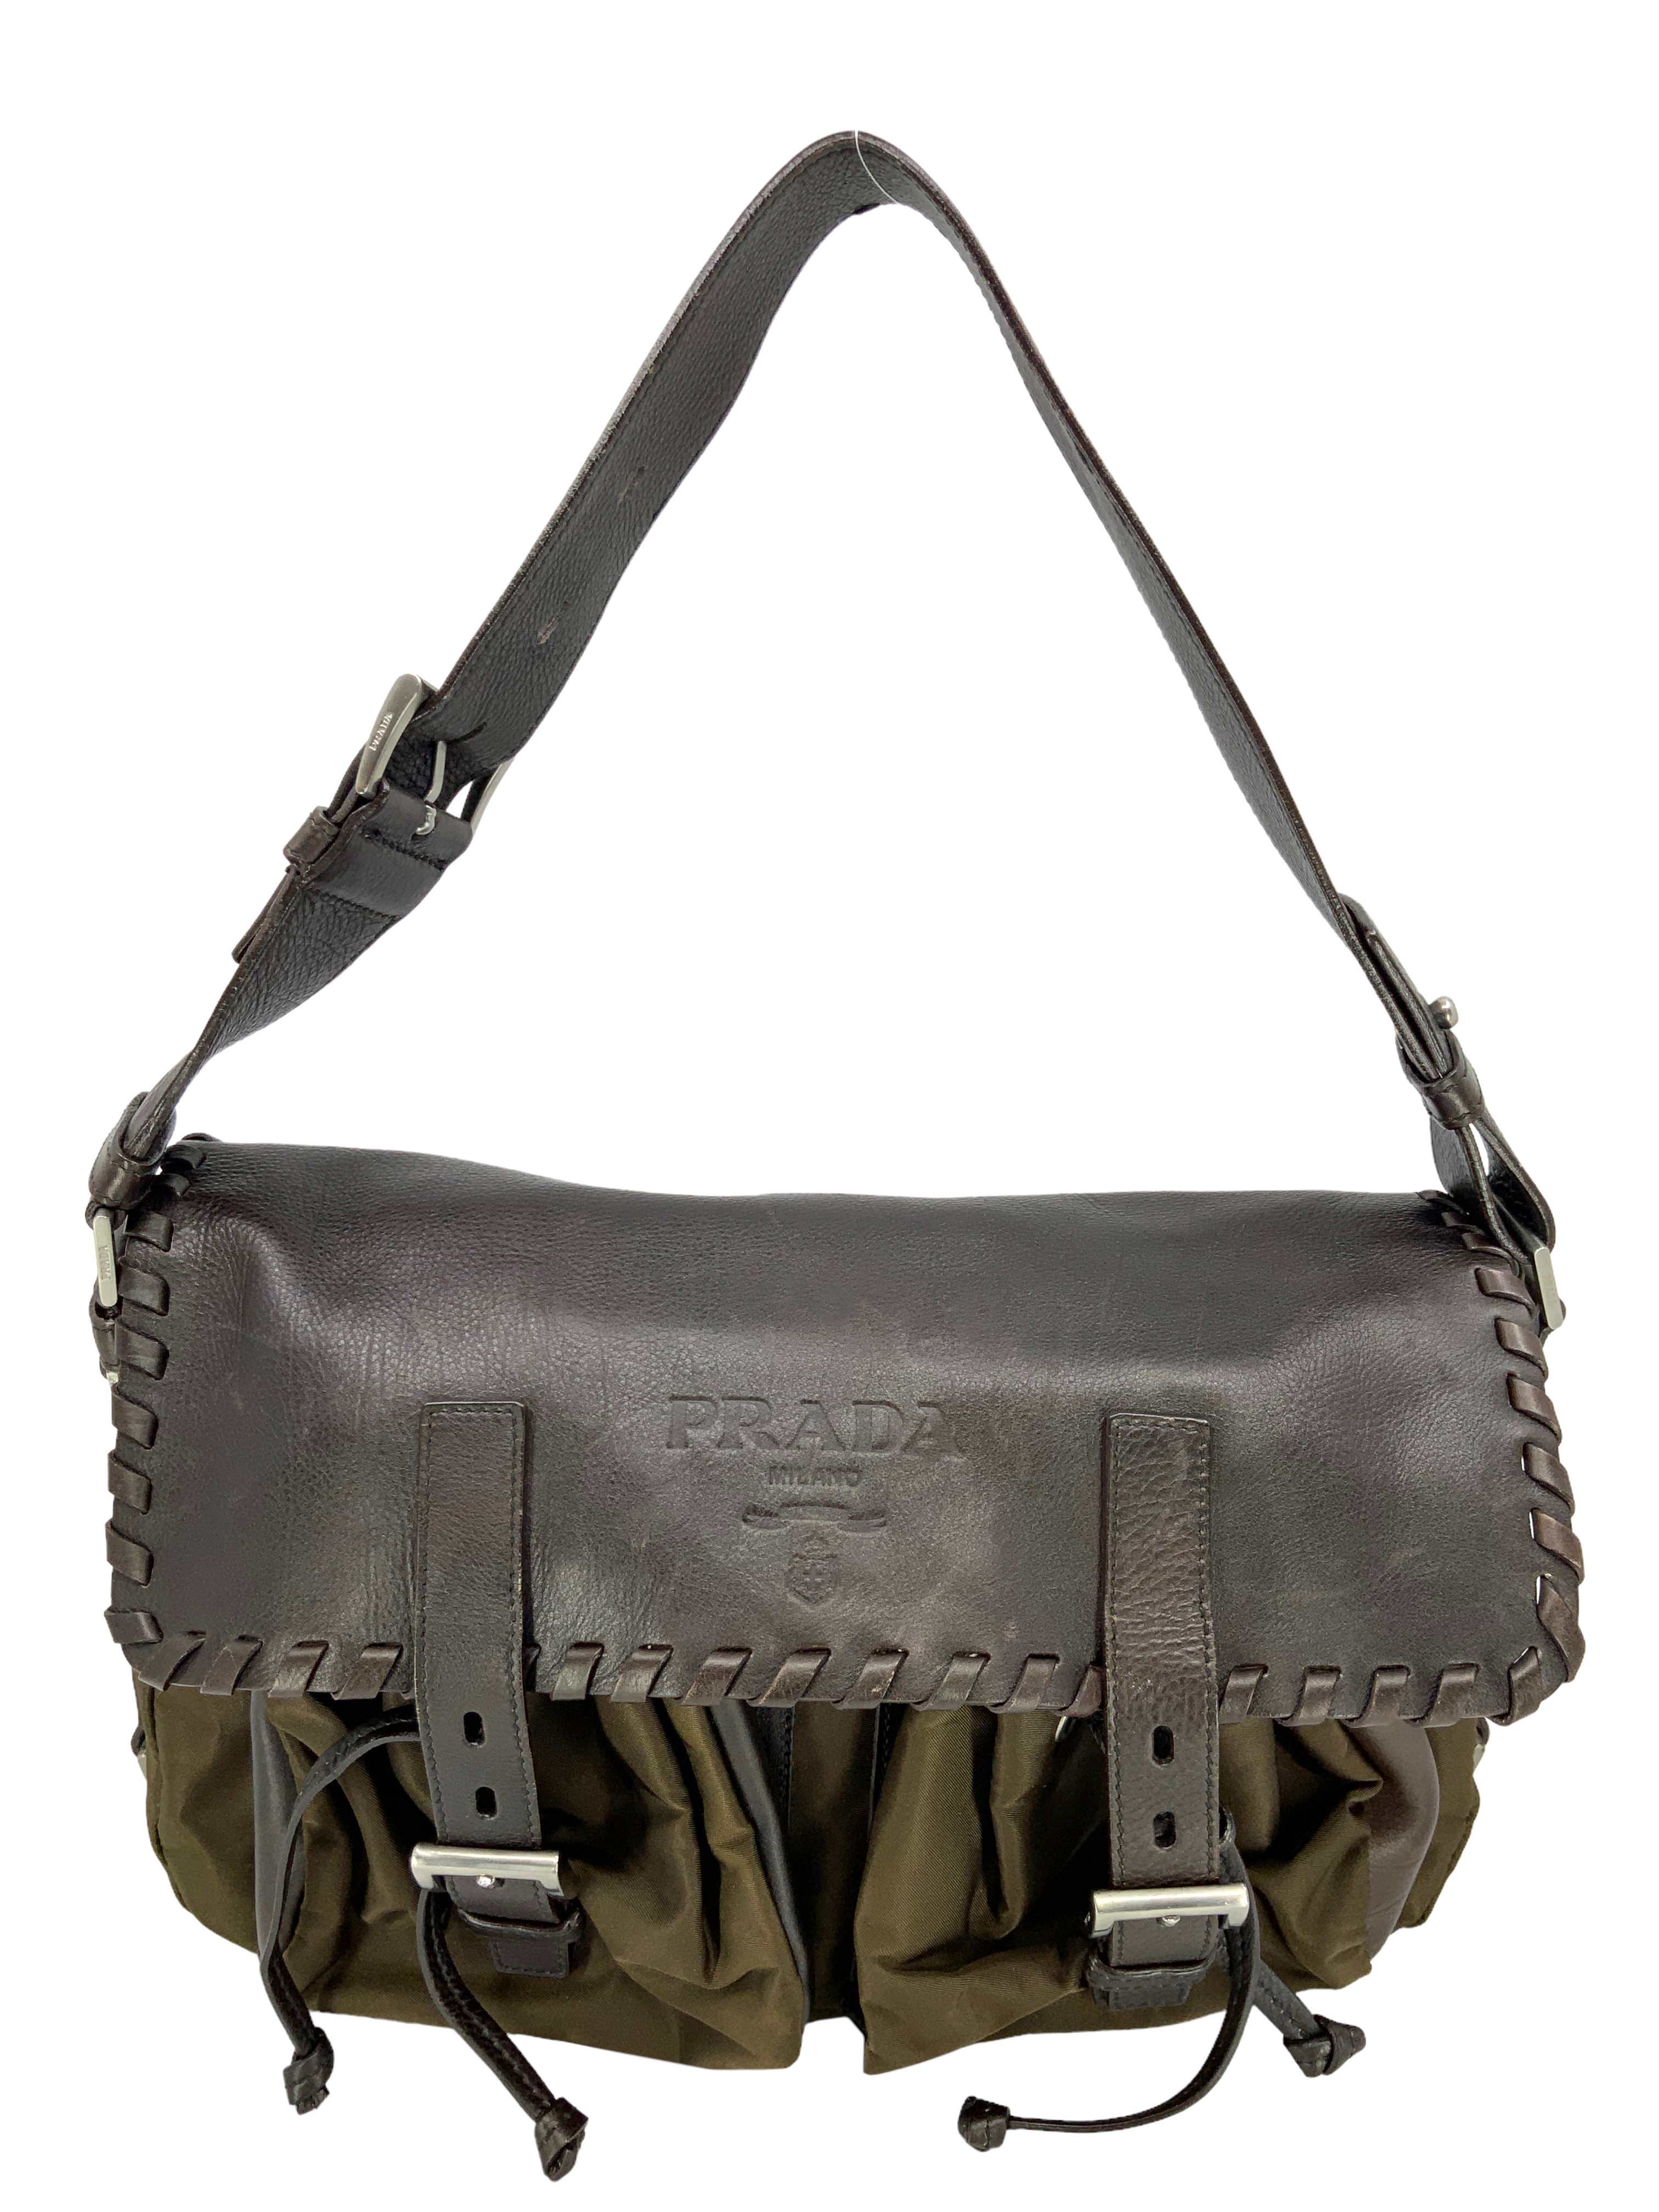 Prada Tessuto Nylon and Leather Flap Bag